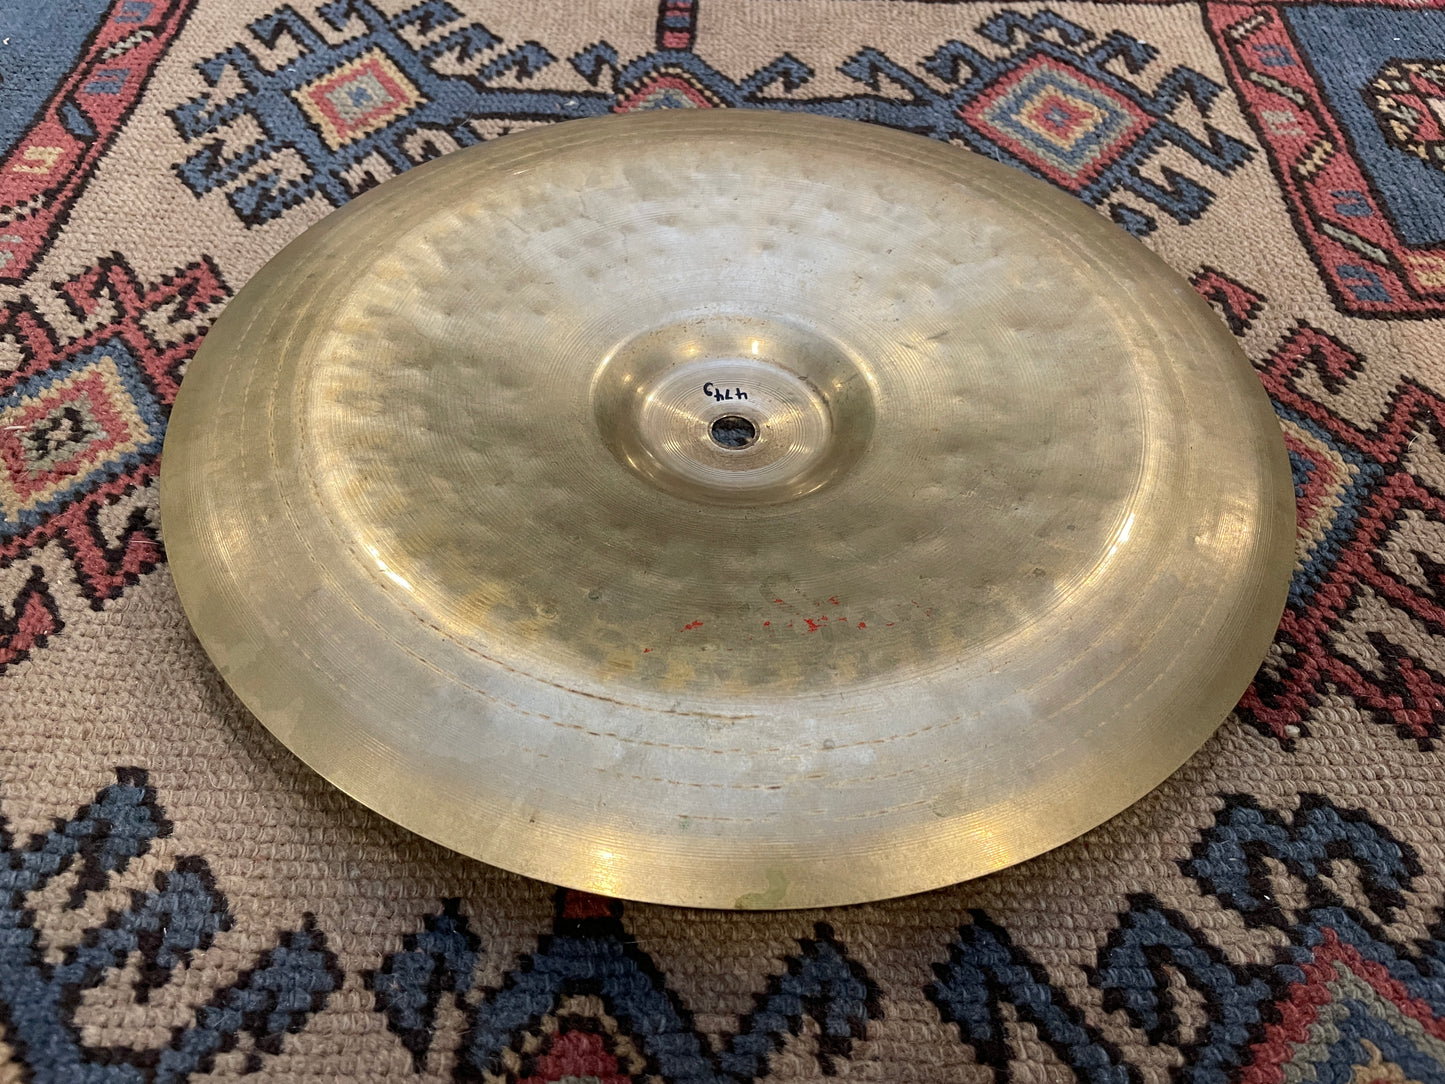 12" Zildjian Oriental China Trash Cymbal 474g A0612